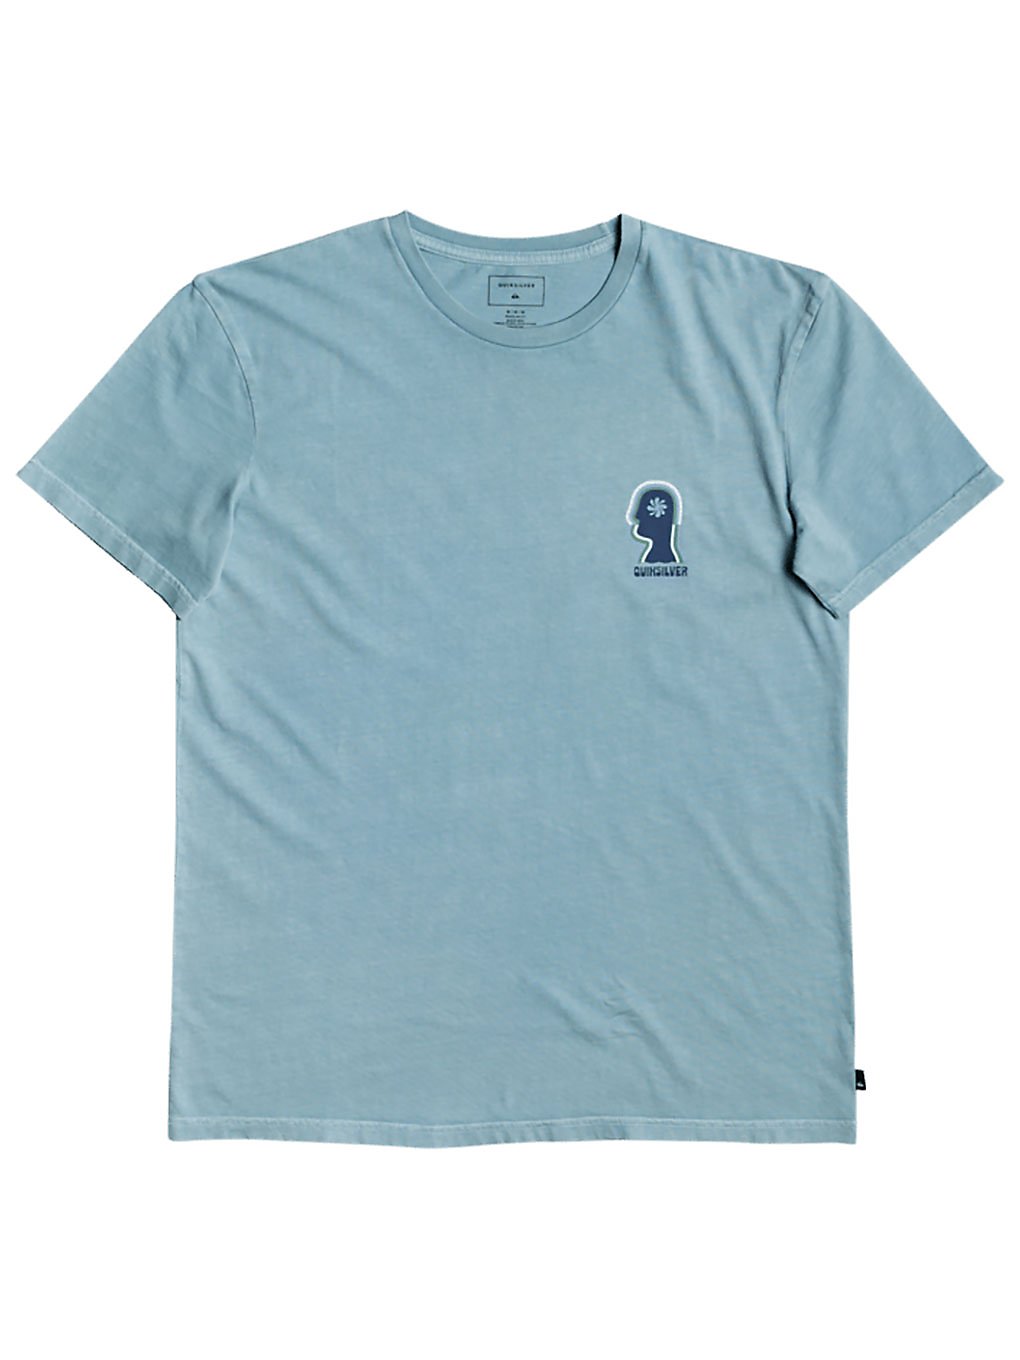 Quiksilver Earth Running T-Shirt blue heaven